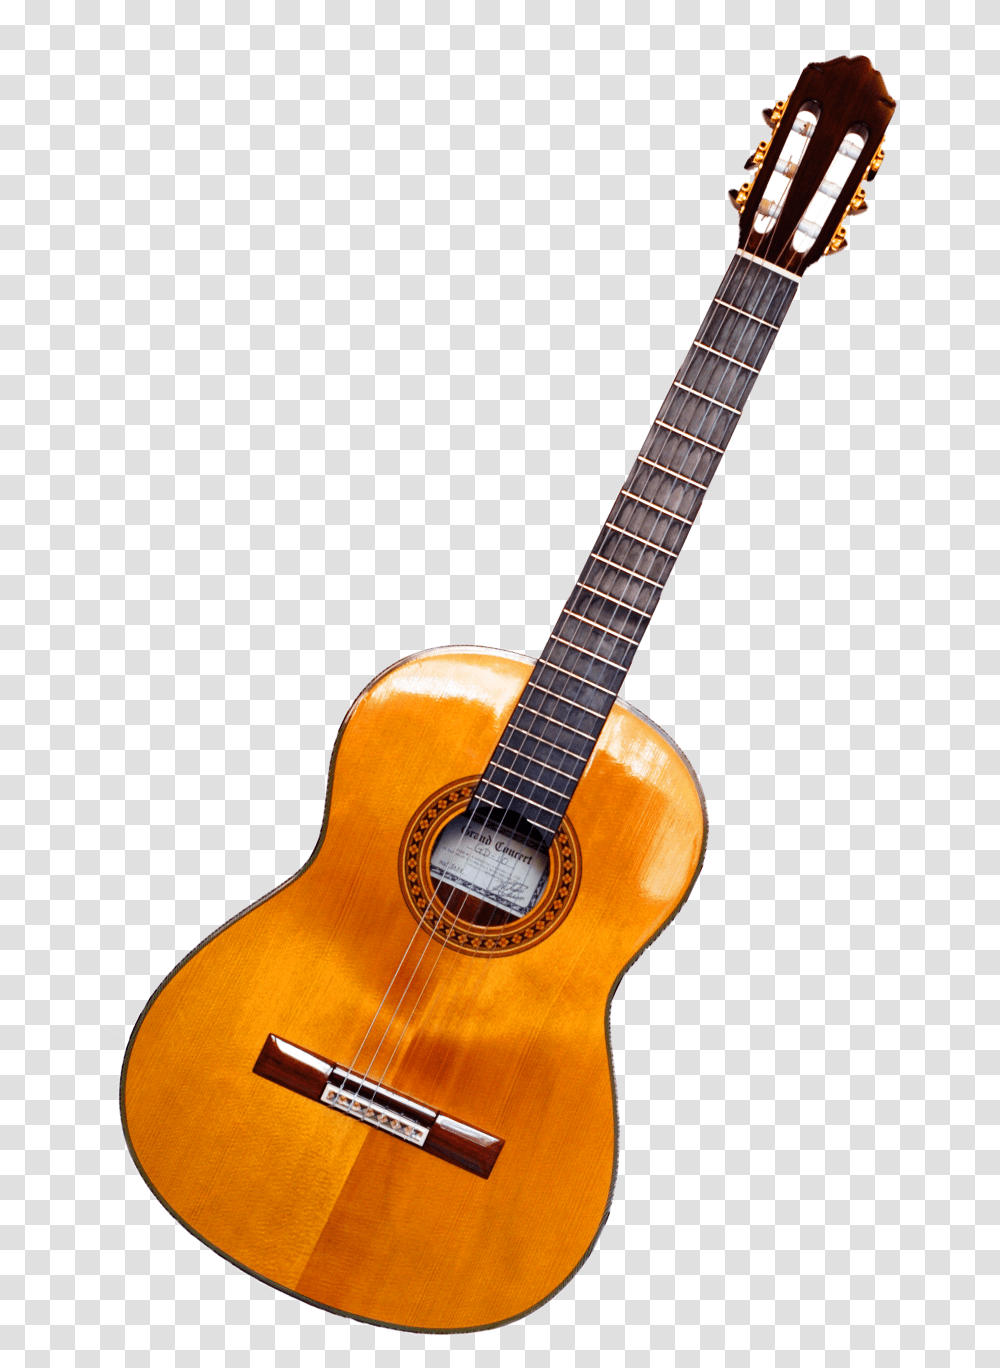 Guitar Image Web Icons, Leisure Activities, Musical Instrument, Bass Guitar, Electric Guitar Transparent Png